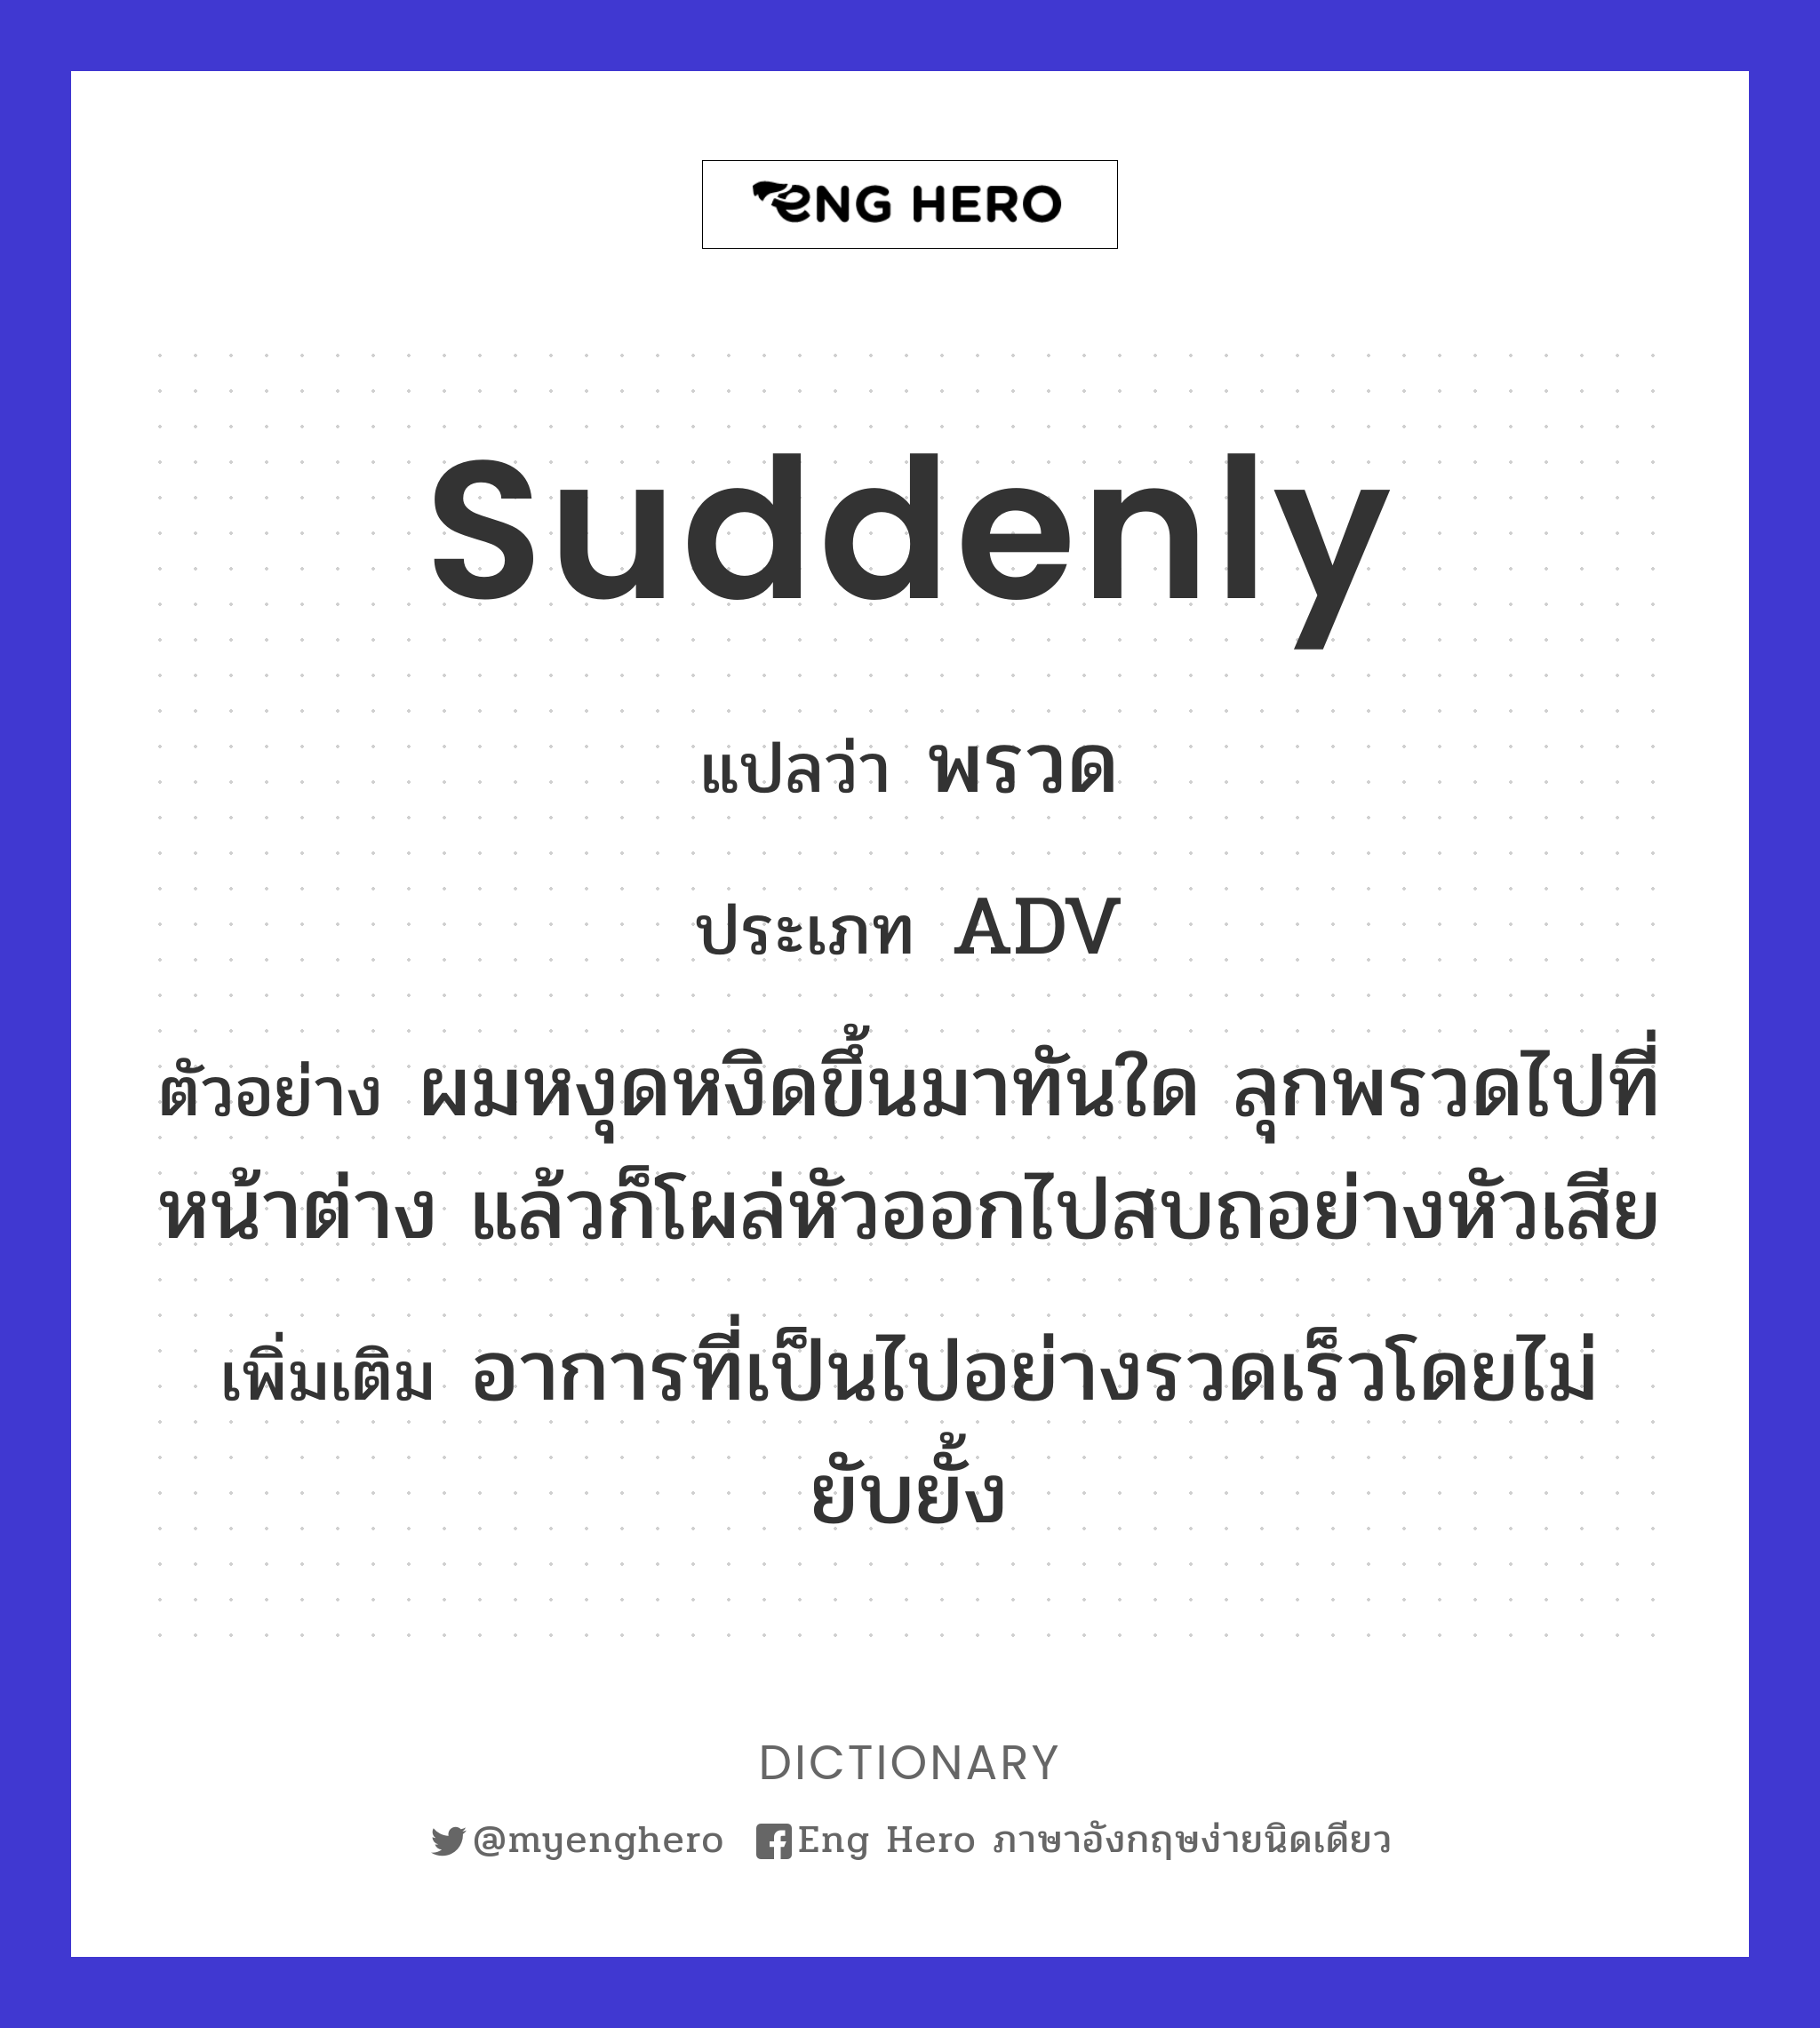 suddenly